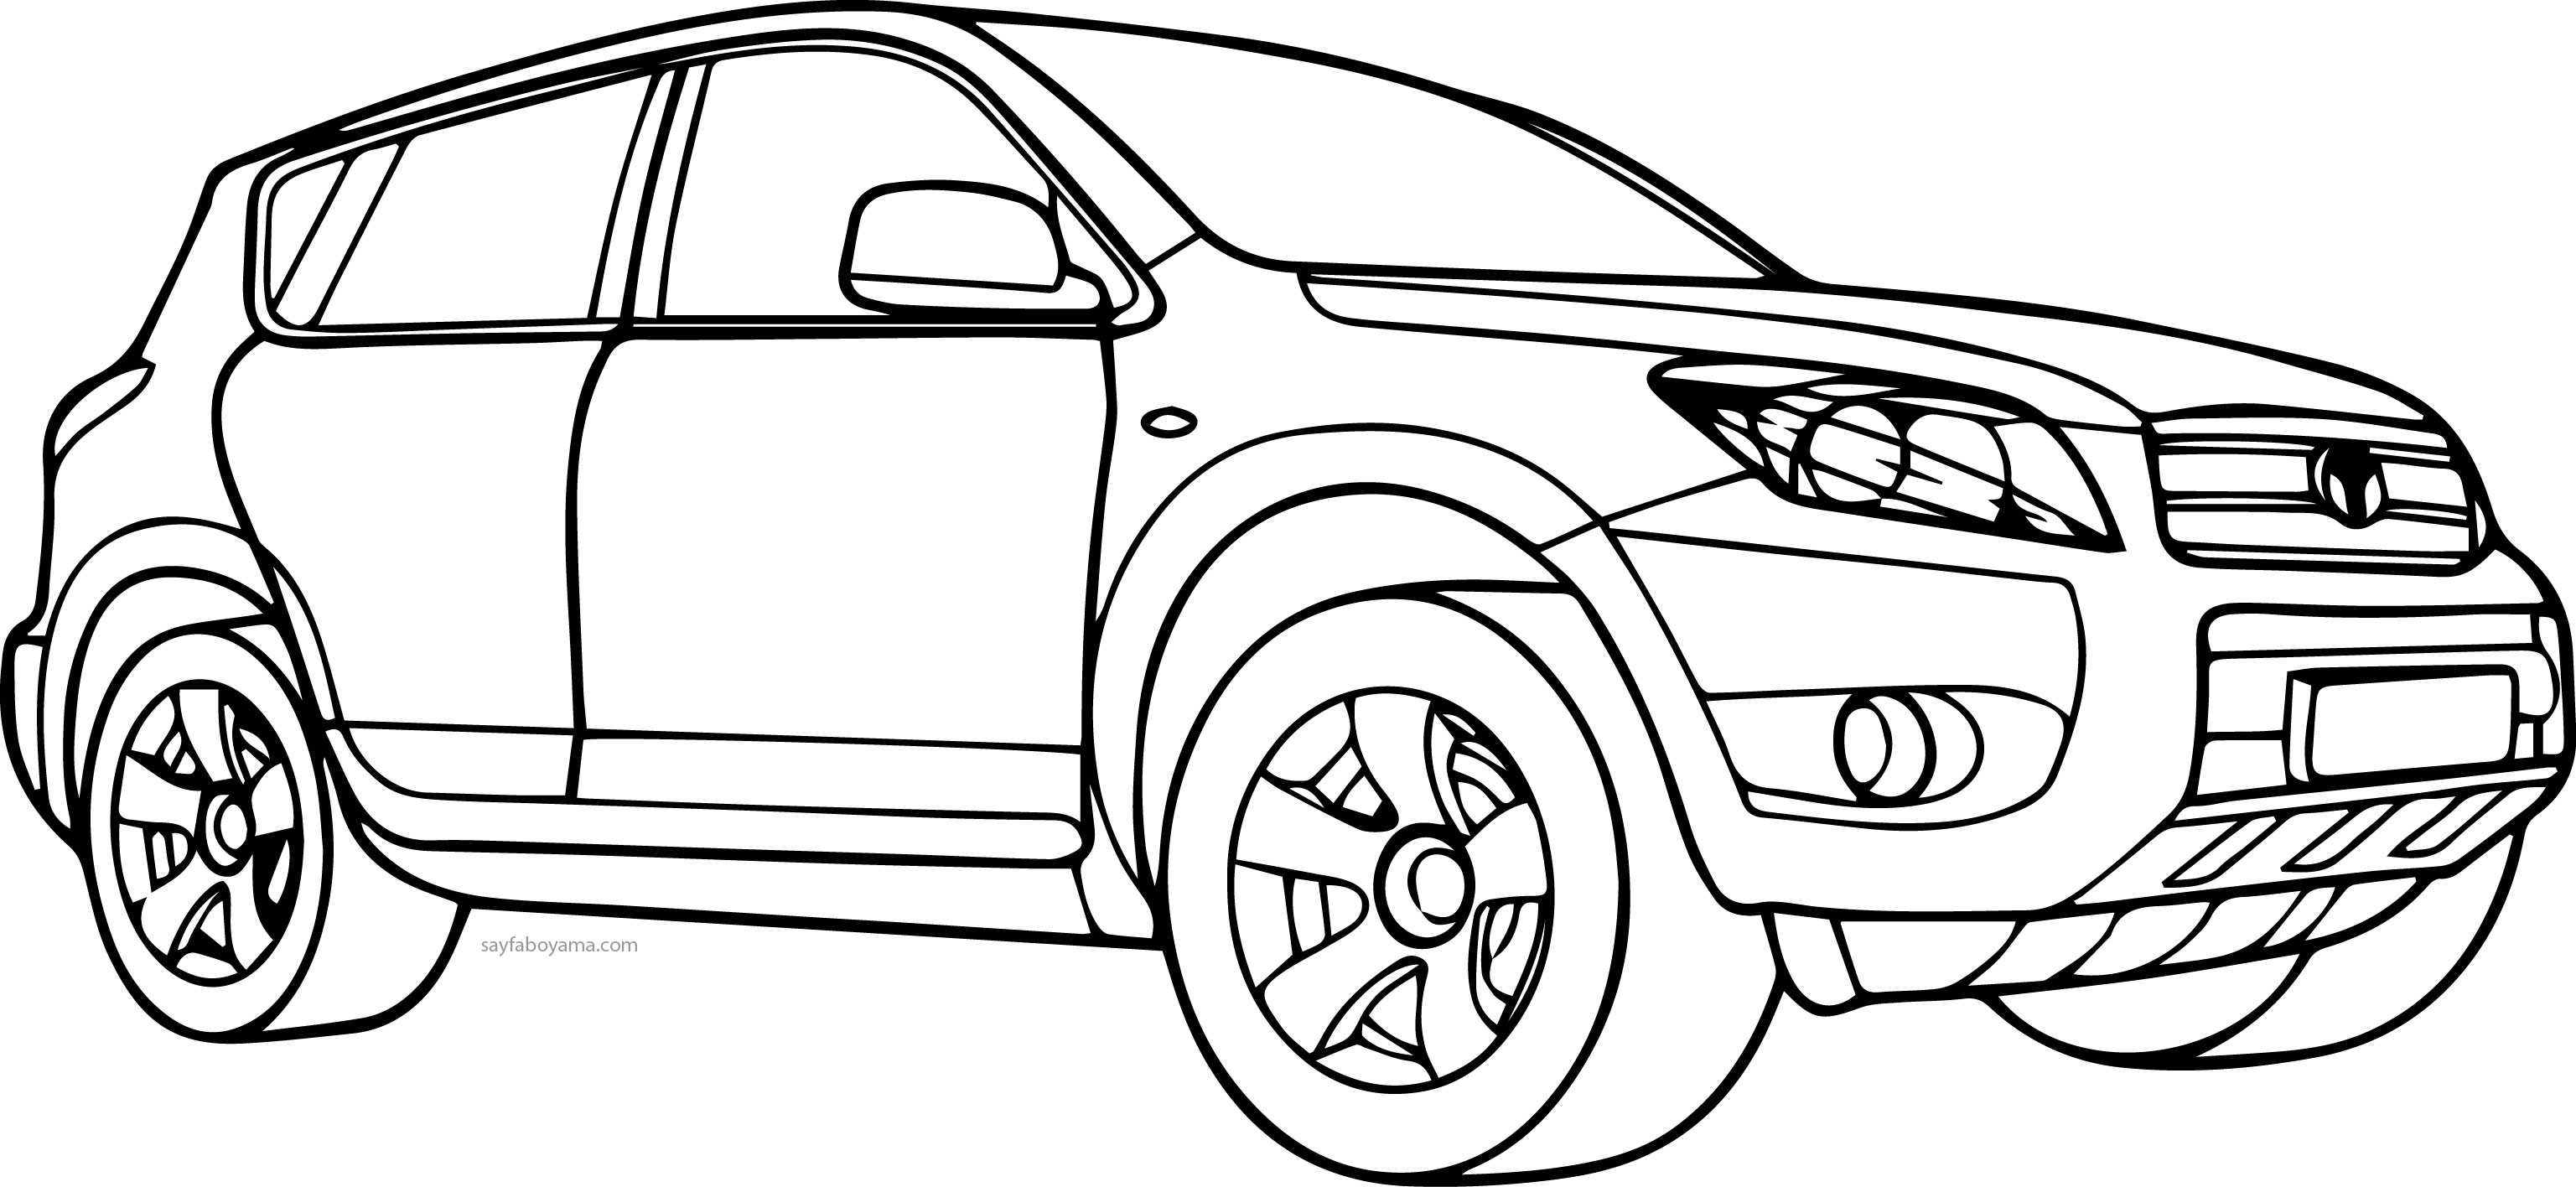 Рисунок рав. Раскраска Toyota rav4. Ниссан Мурано раскраска. Раскраска Ниссан Кашкай 2008. Раскраска Лексус LX 570.